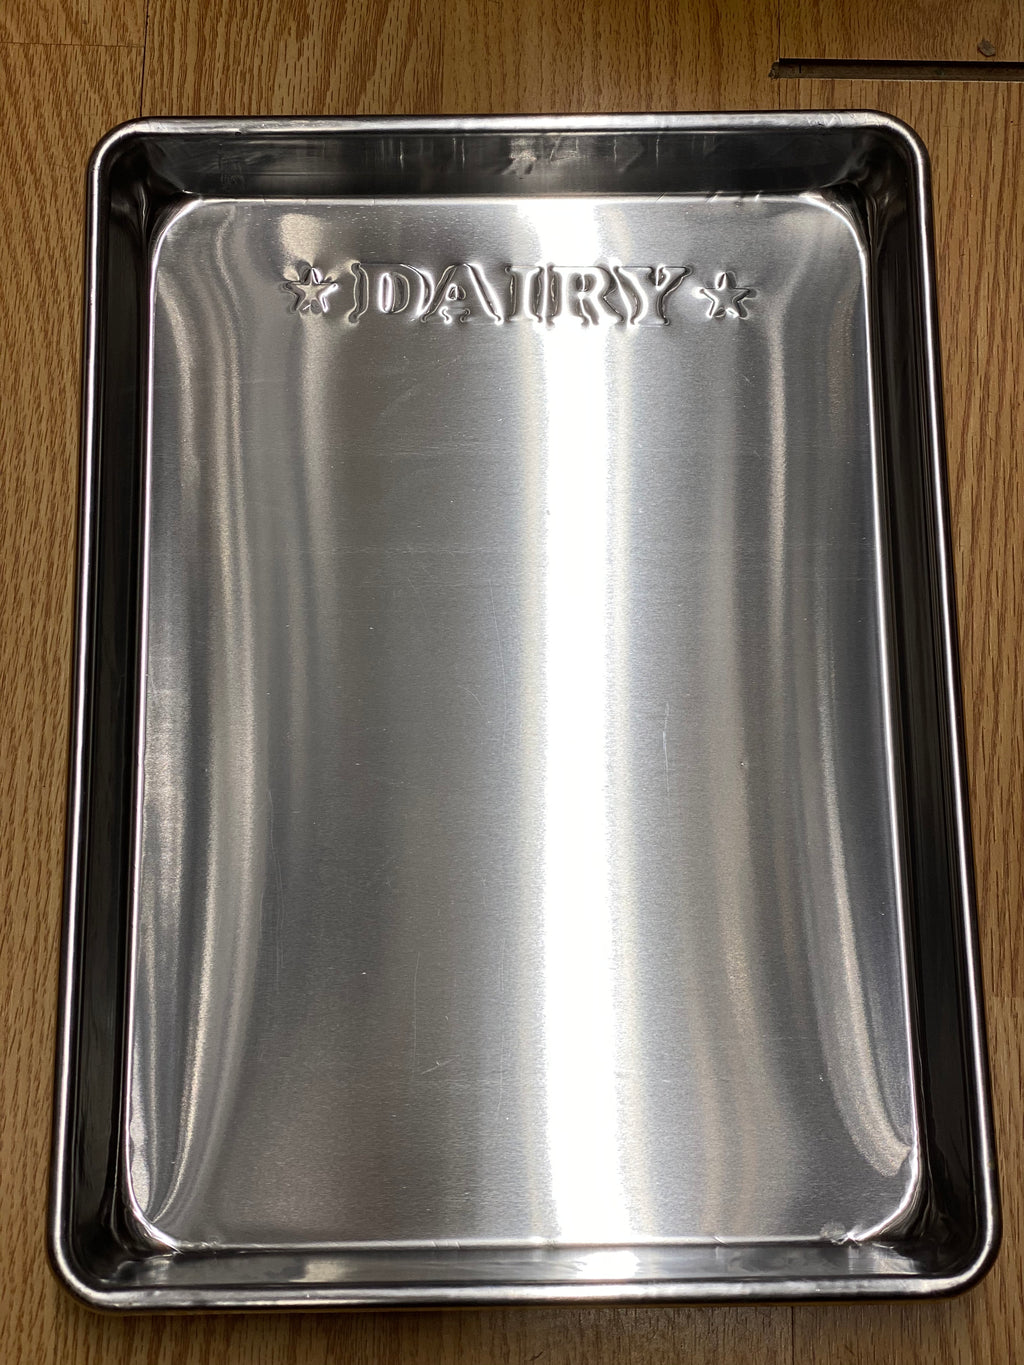 DAIRY 9x13 baking tray